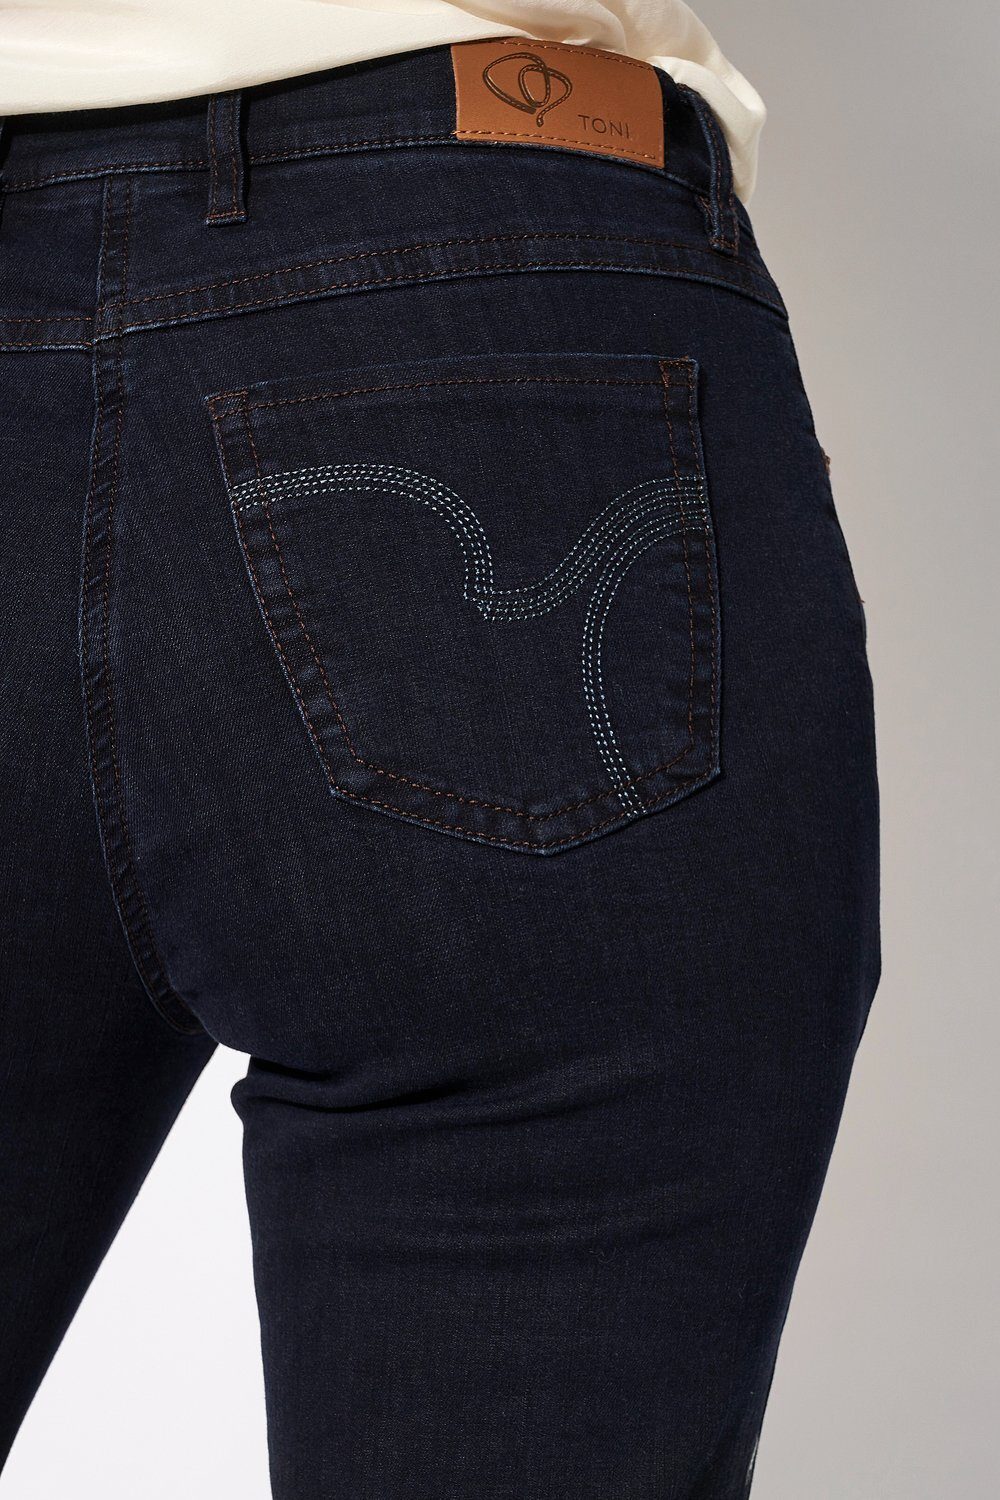 TONI 5-Pocket-Jeans - dunkelblau Bauch 059 und Shape Shaping-Effekt Perfect mit an Po